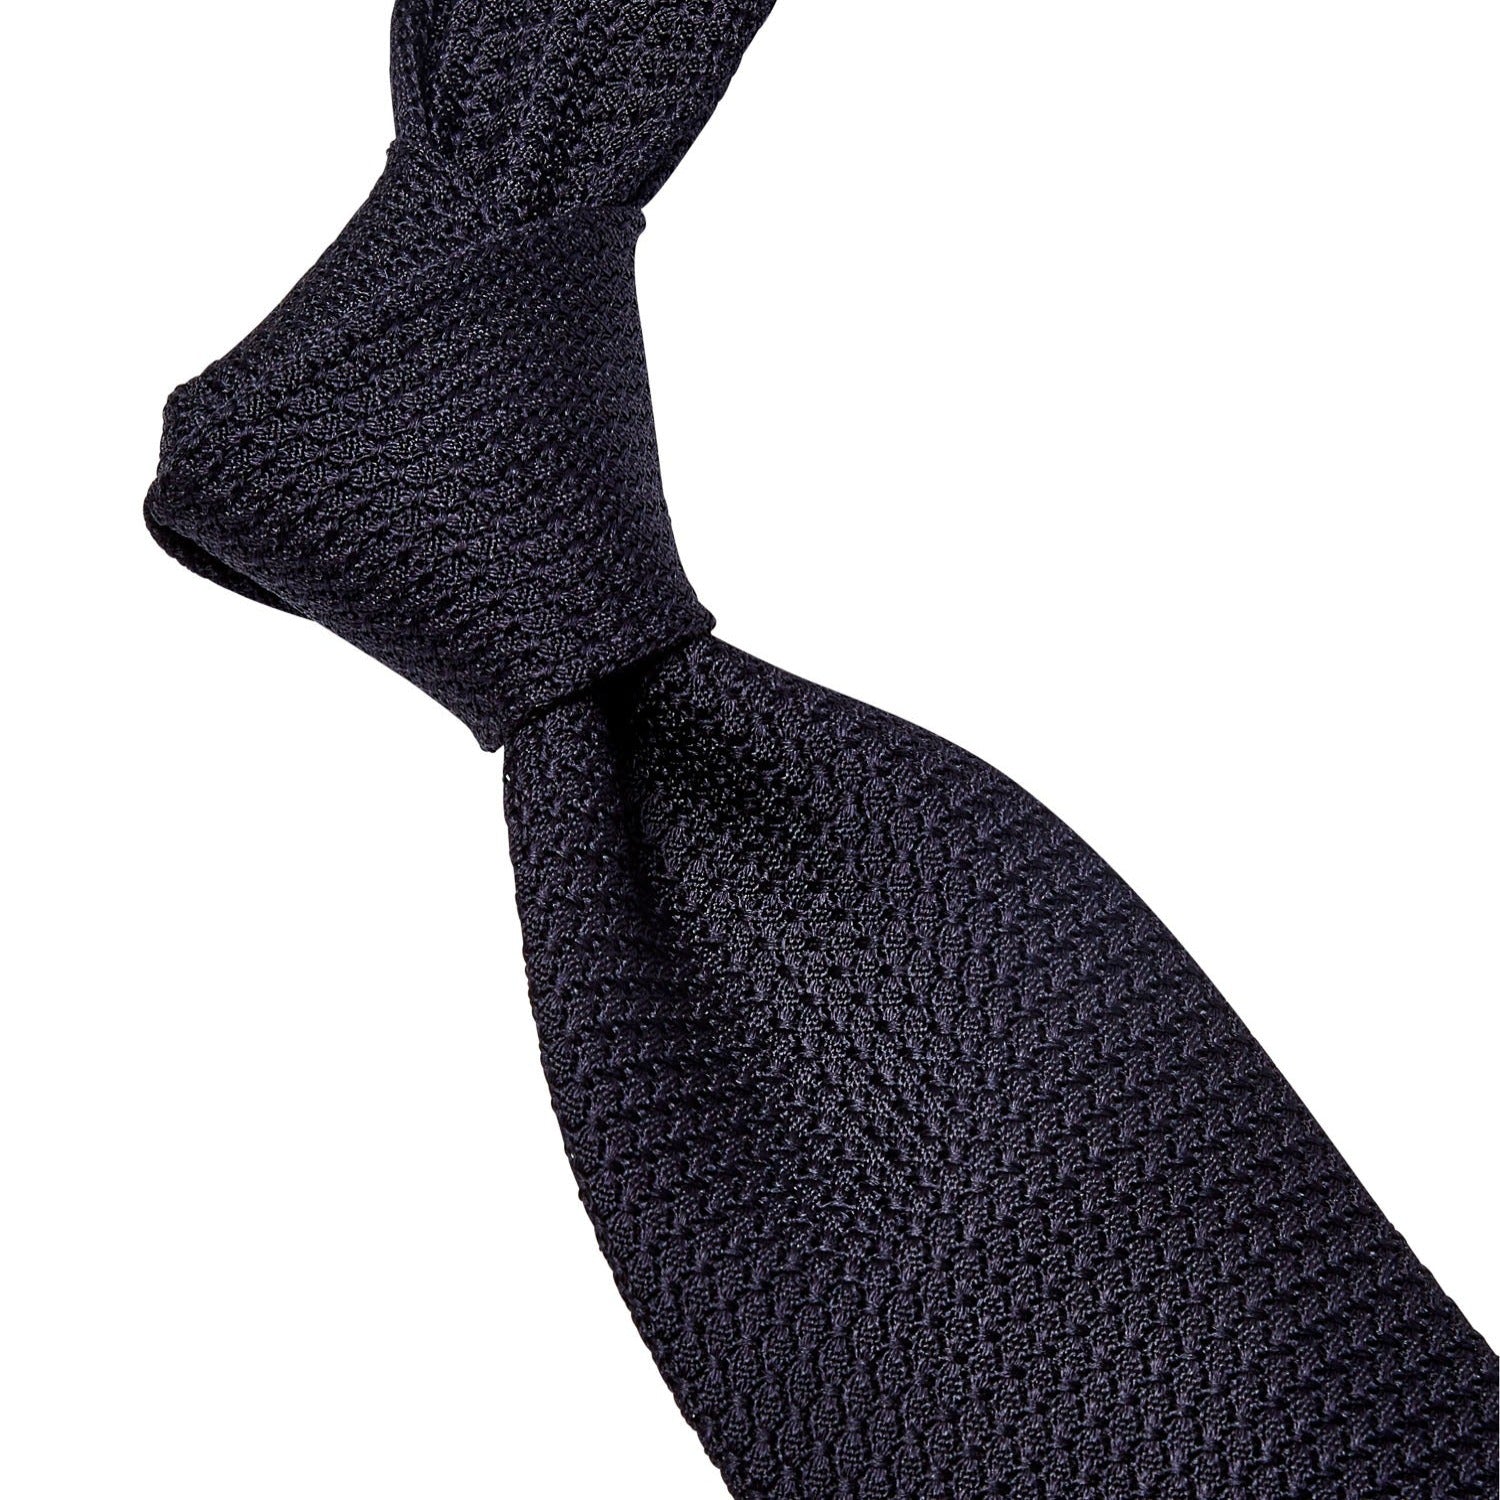 A Sovereign Grade Black Grenadine Grossa tie handmade in the United Kingdom by KirbyAllison.com.